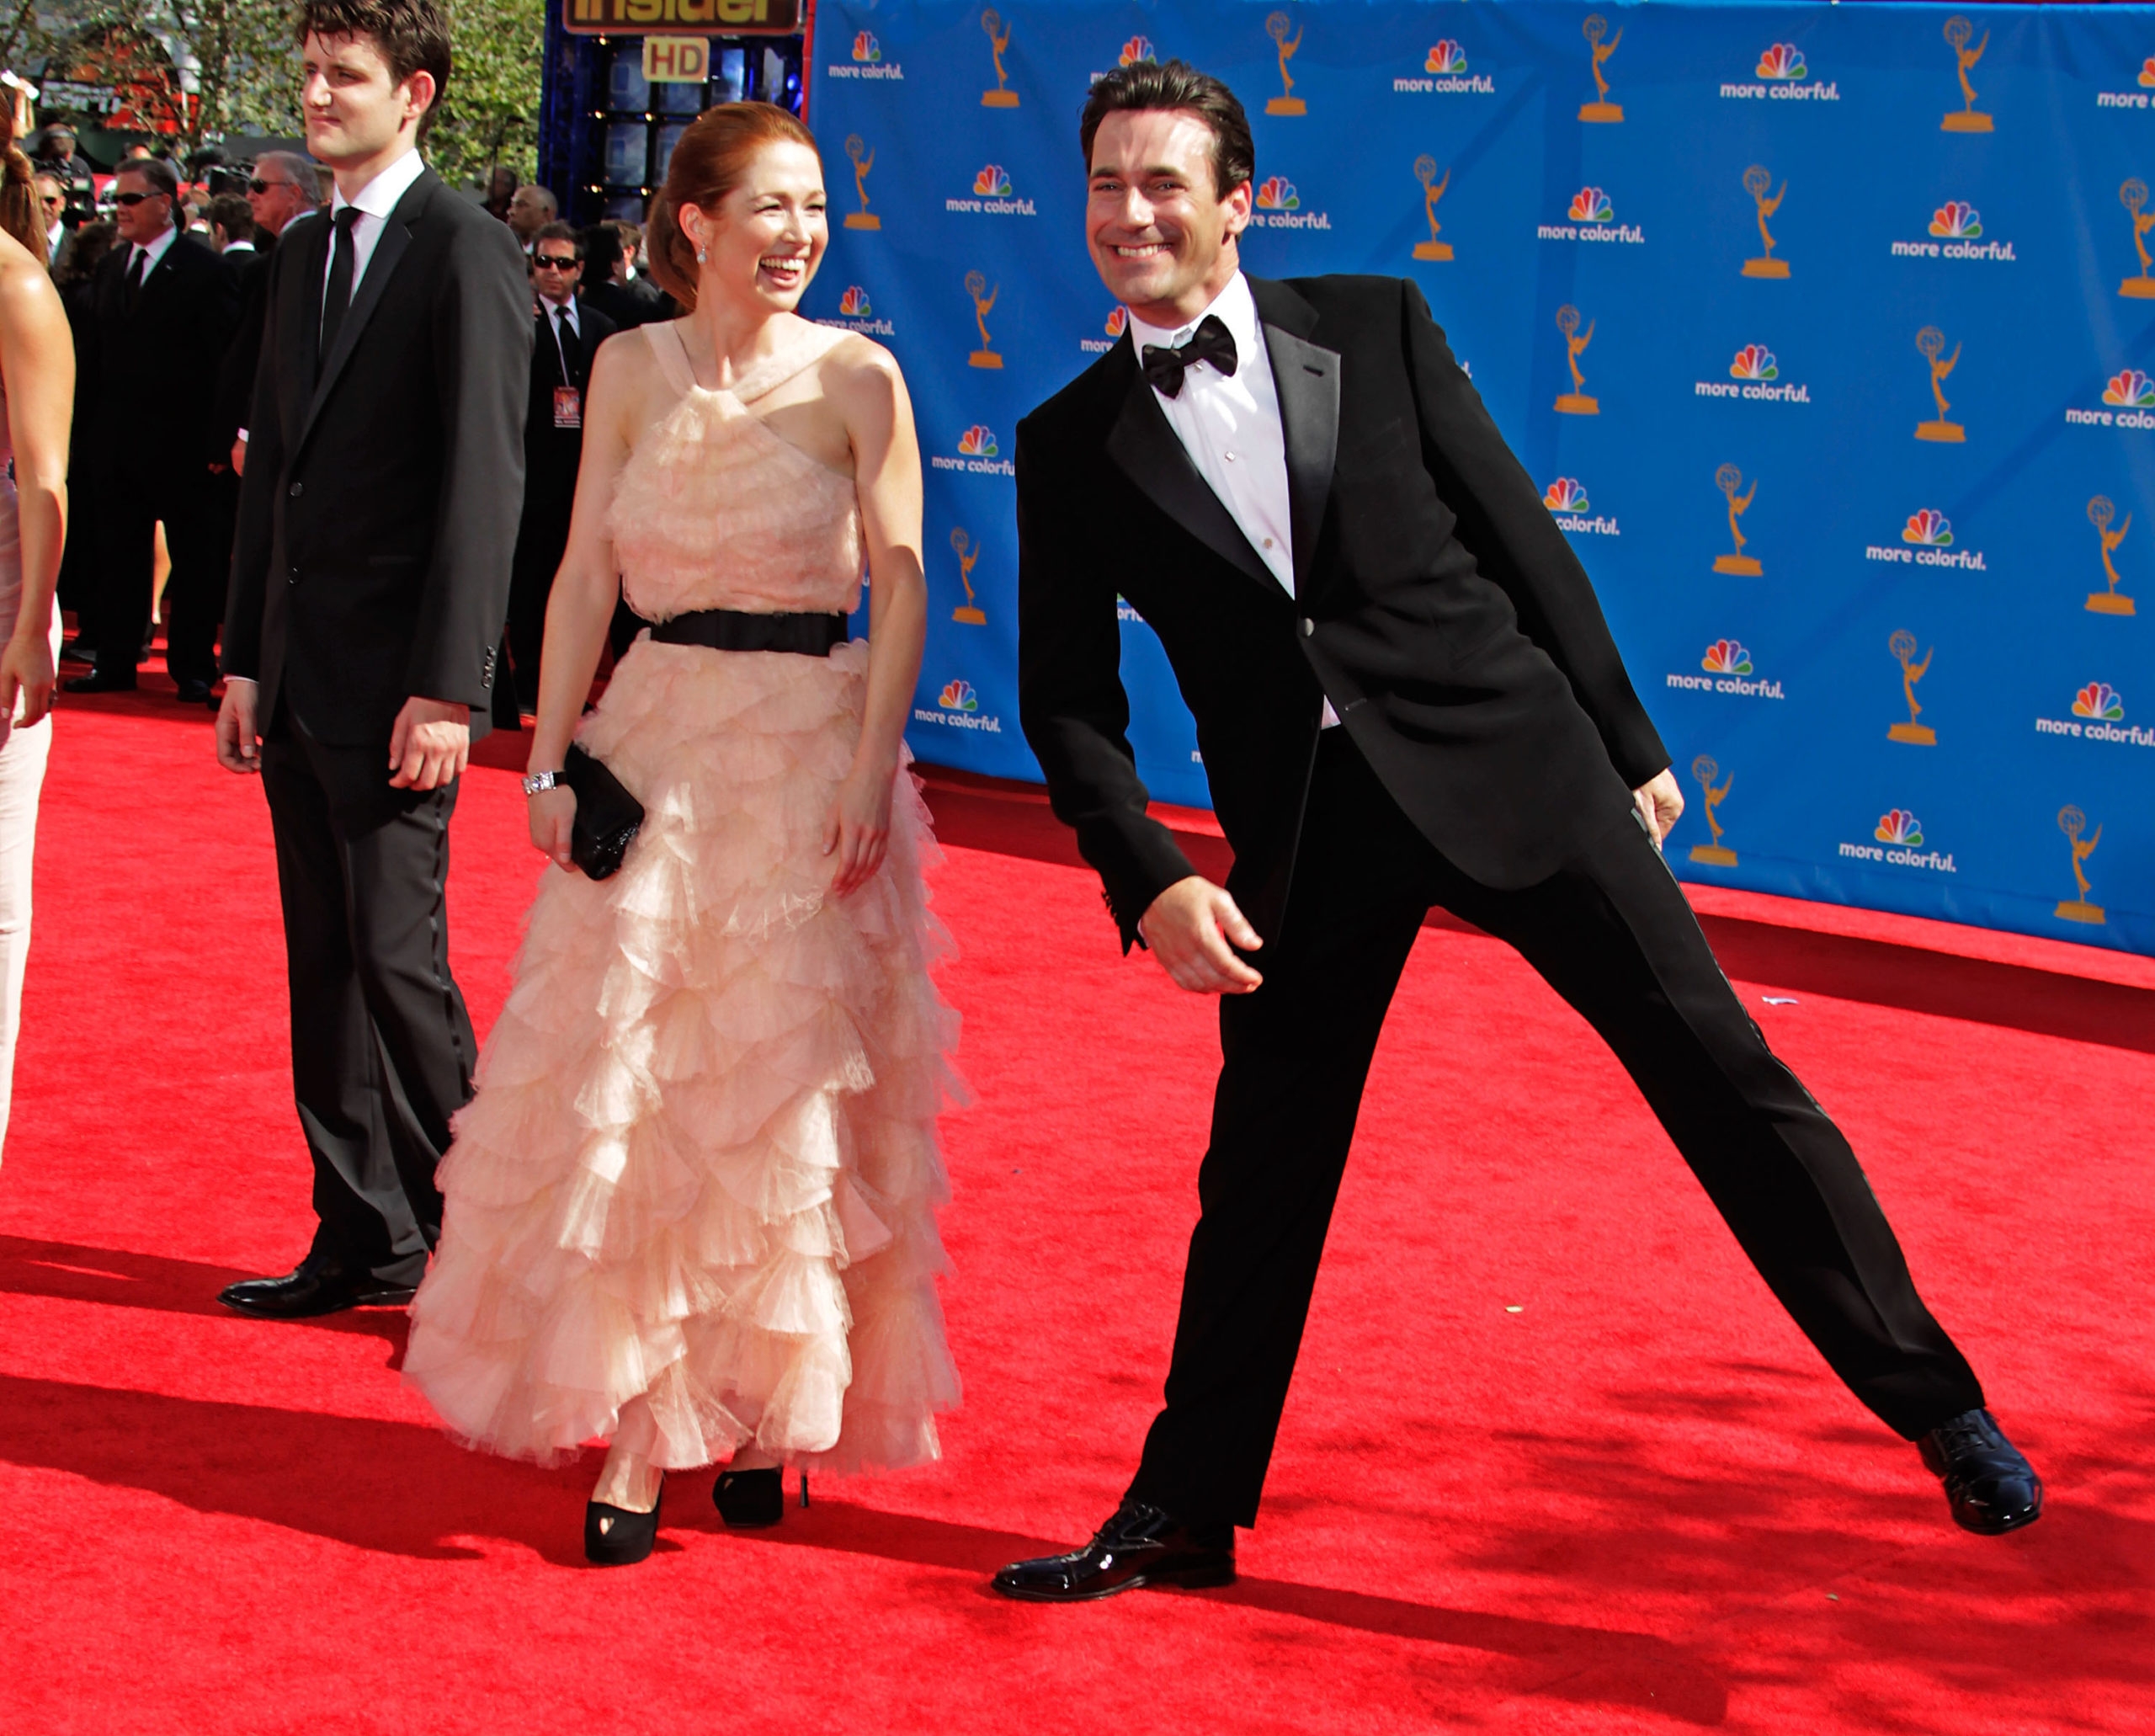 2010 Primetime Emmy Awards - Ellie Kemper and Jon Hamm